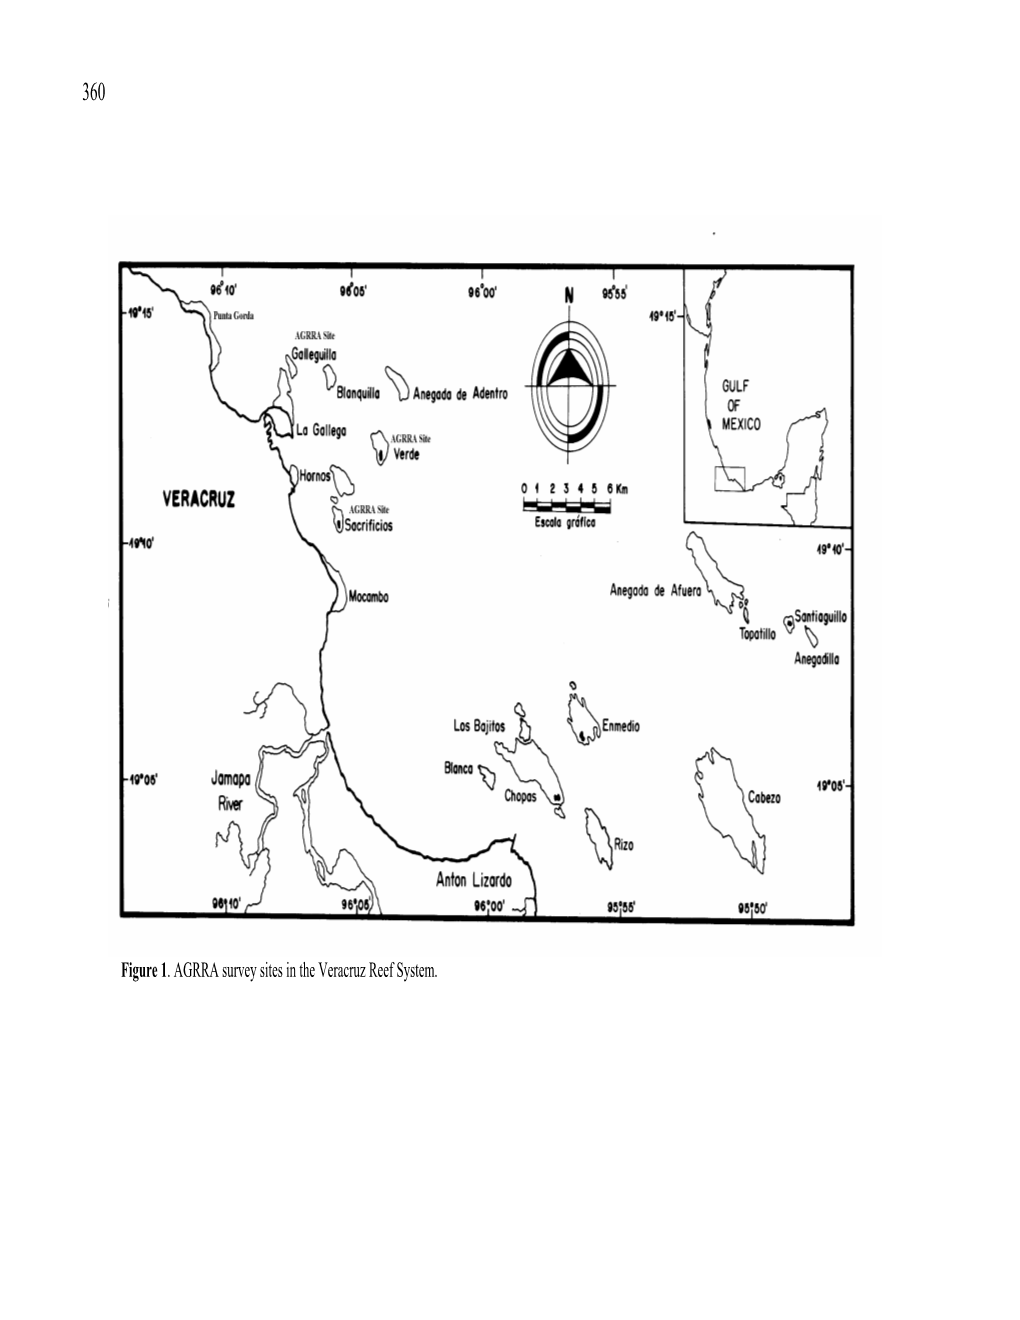 Figure 1. AGRRA Survey Sites in the Veracruz Reef System